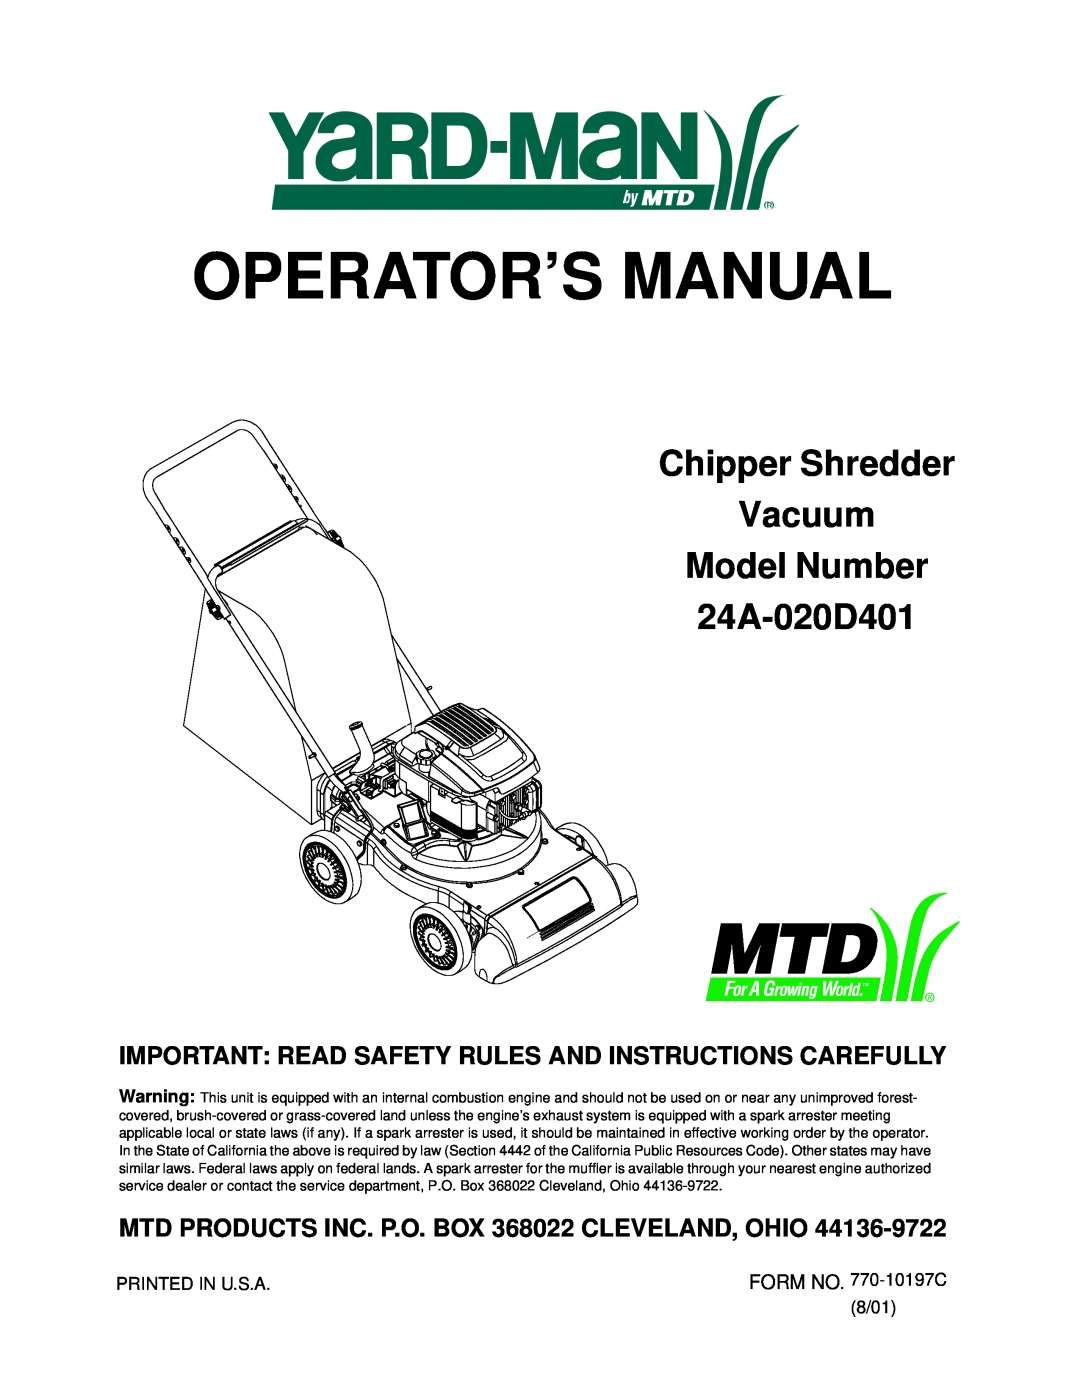 Yard-Man manual Operator’S Manual, Chipper Shredder Vacuum Model Number 24A-020D401 